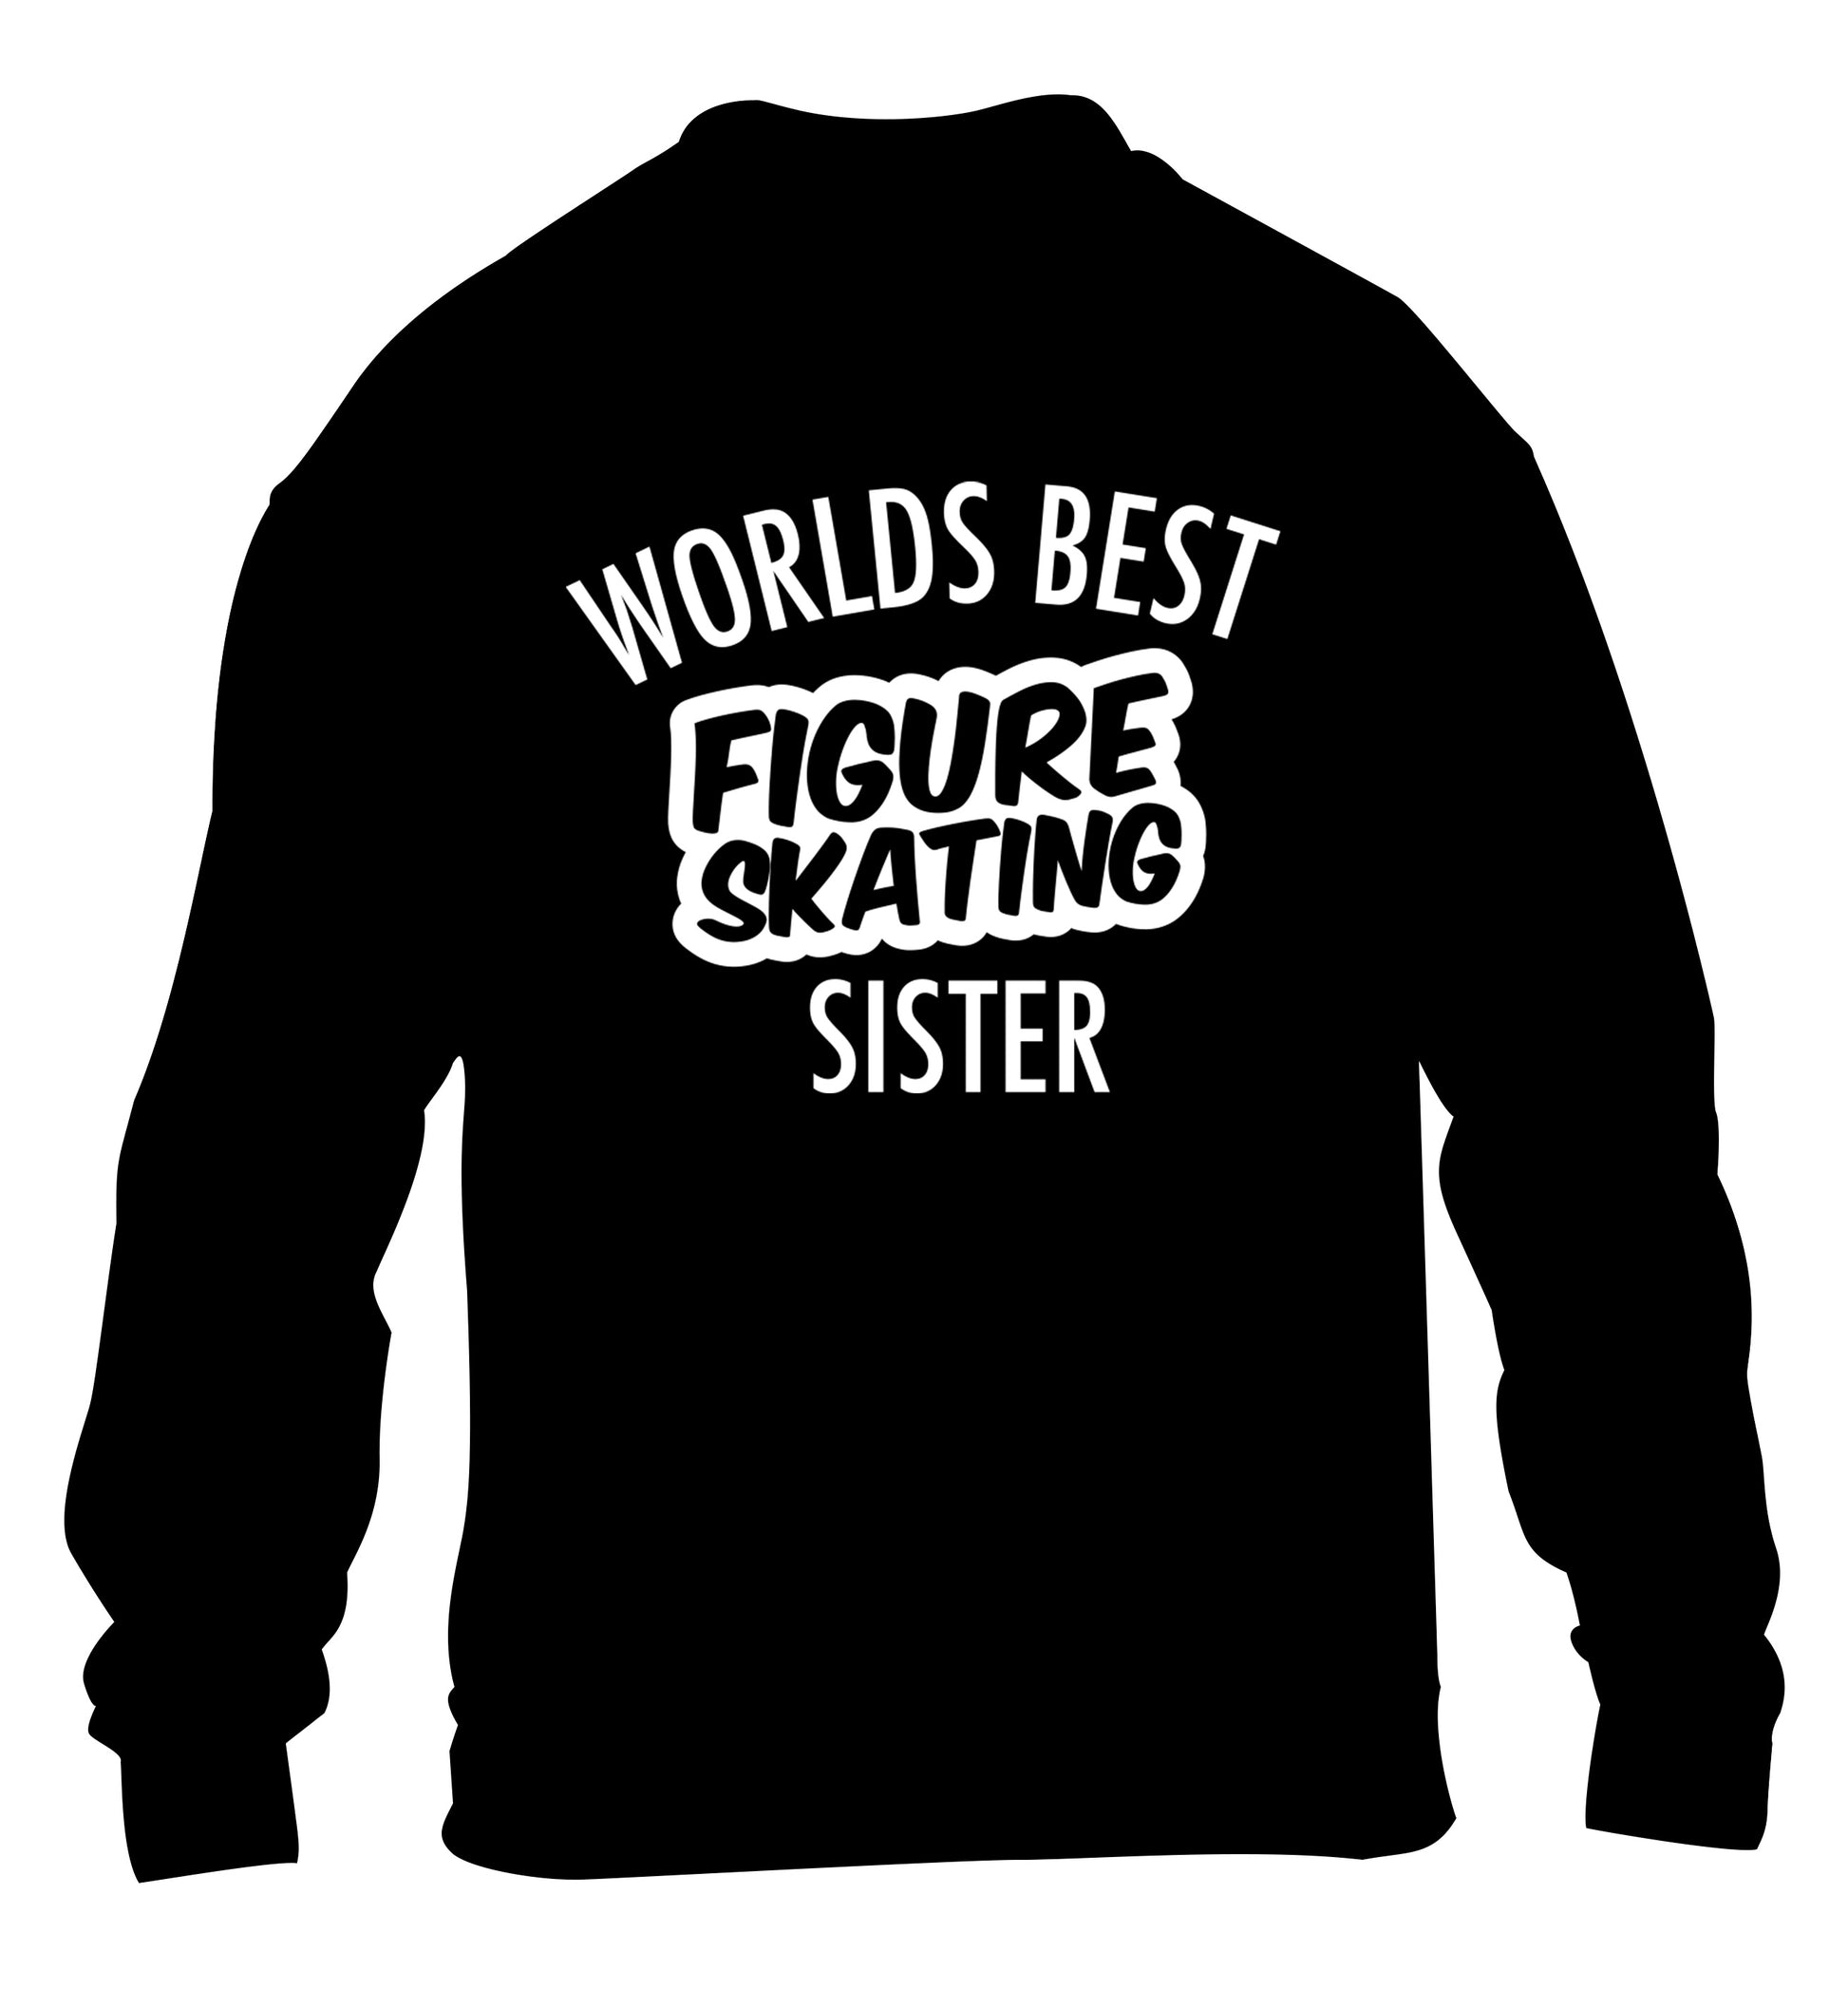 Worlds best figure skating sisterchildren's black sweater 12-14 Years